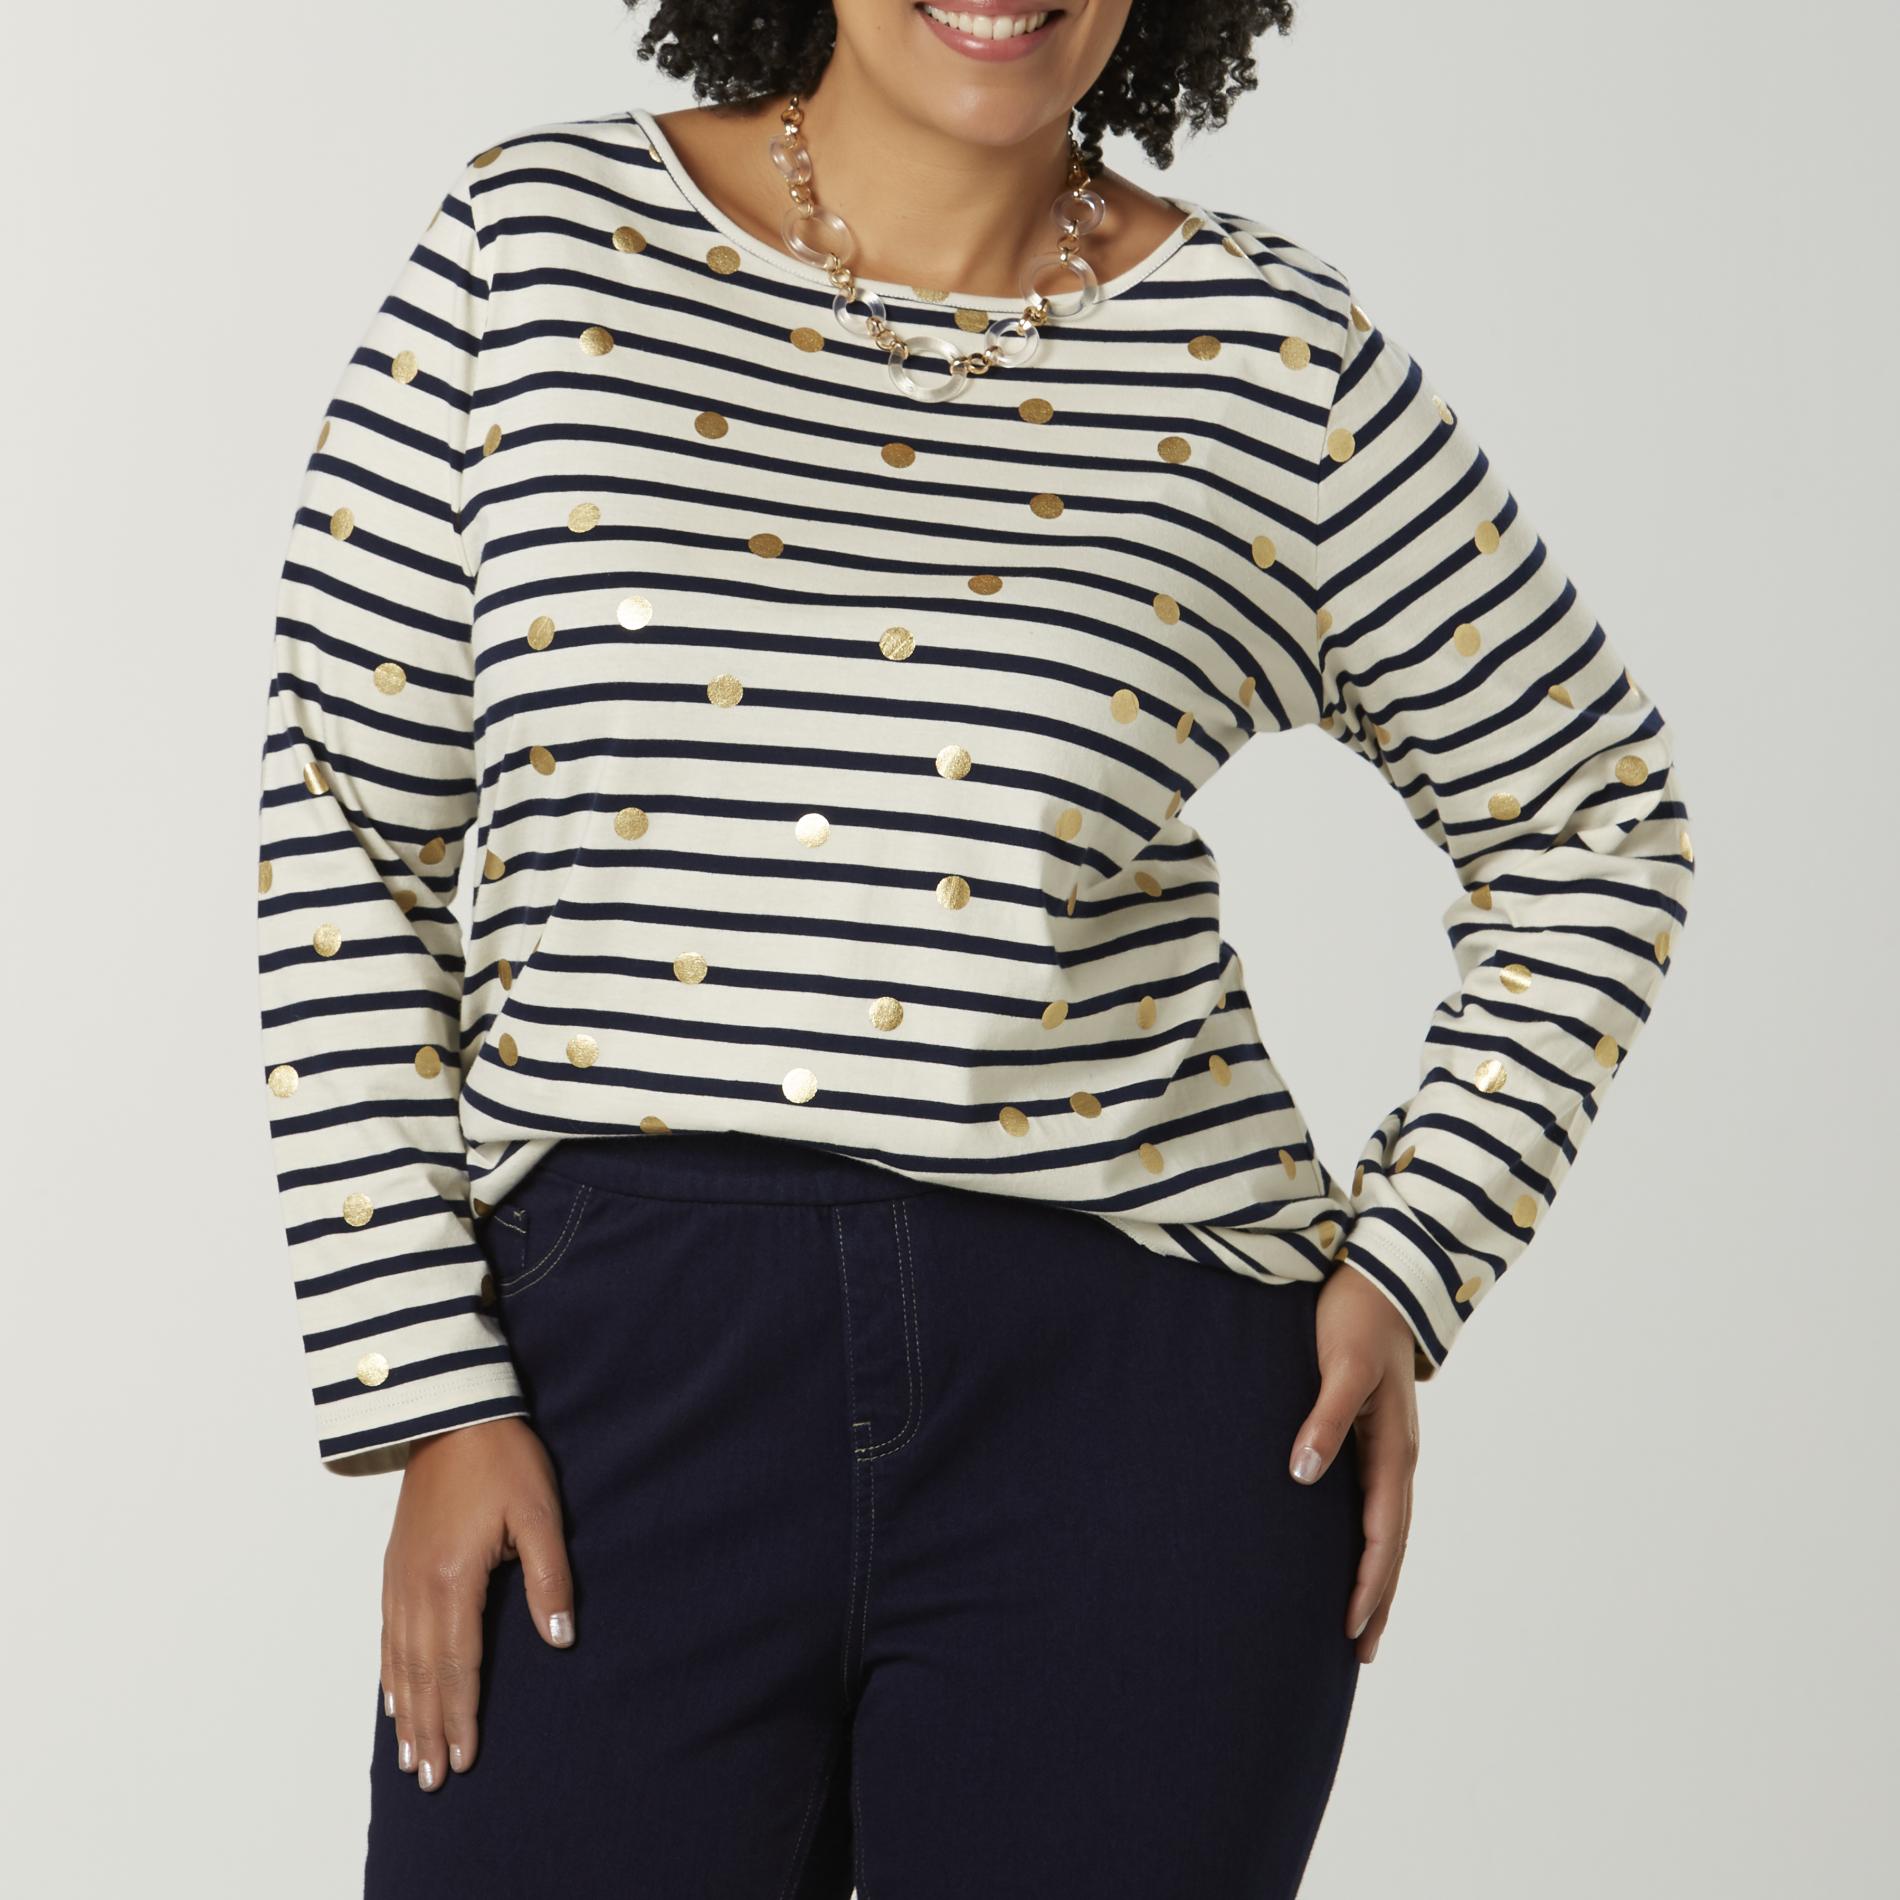 Basic Editions Women's Plus Long-Sleeve T-Shirt - Striped/Dots